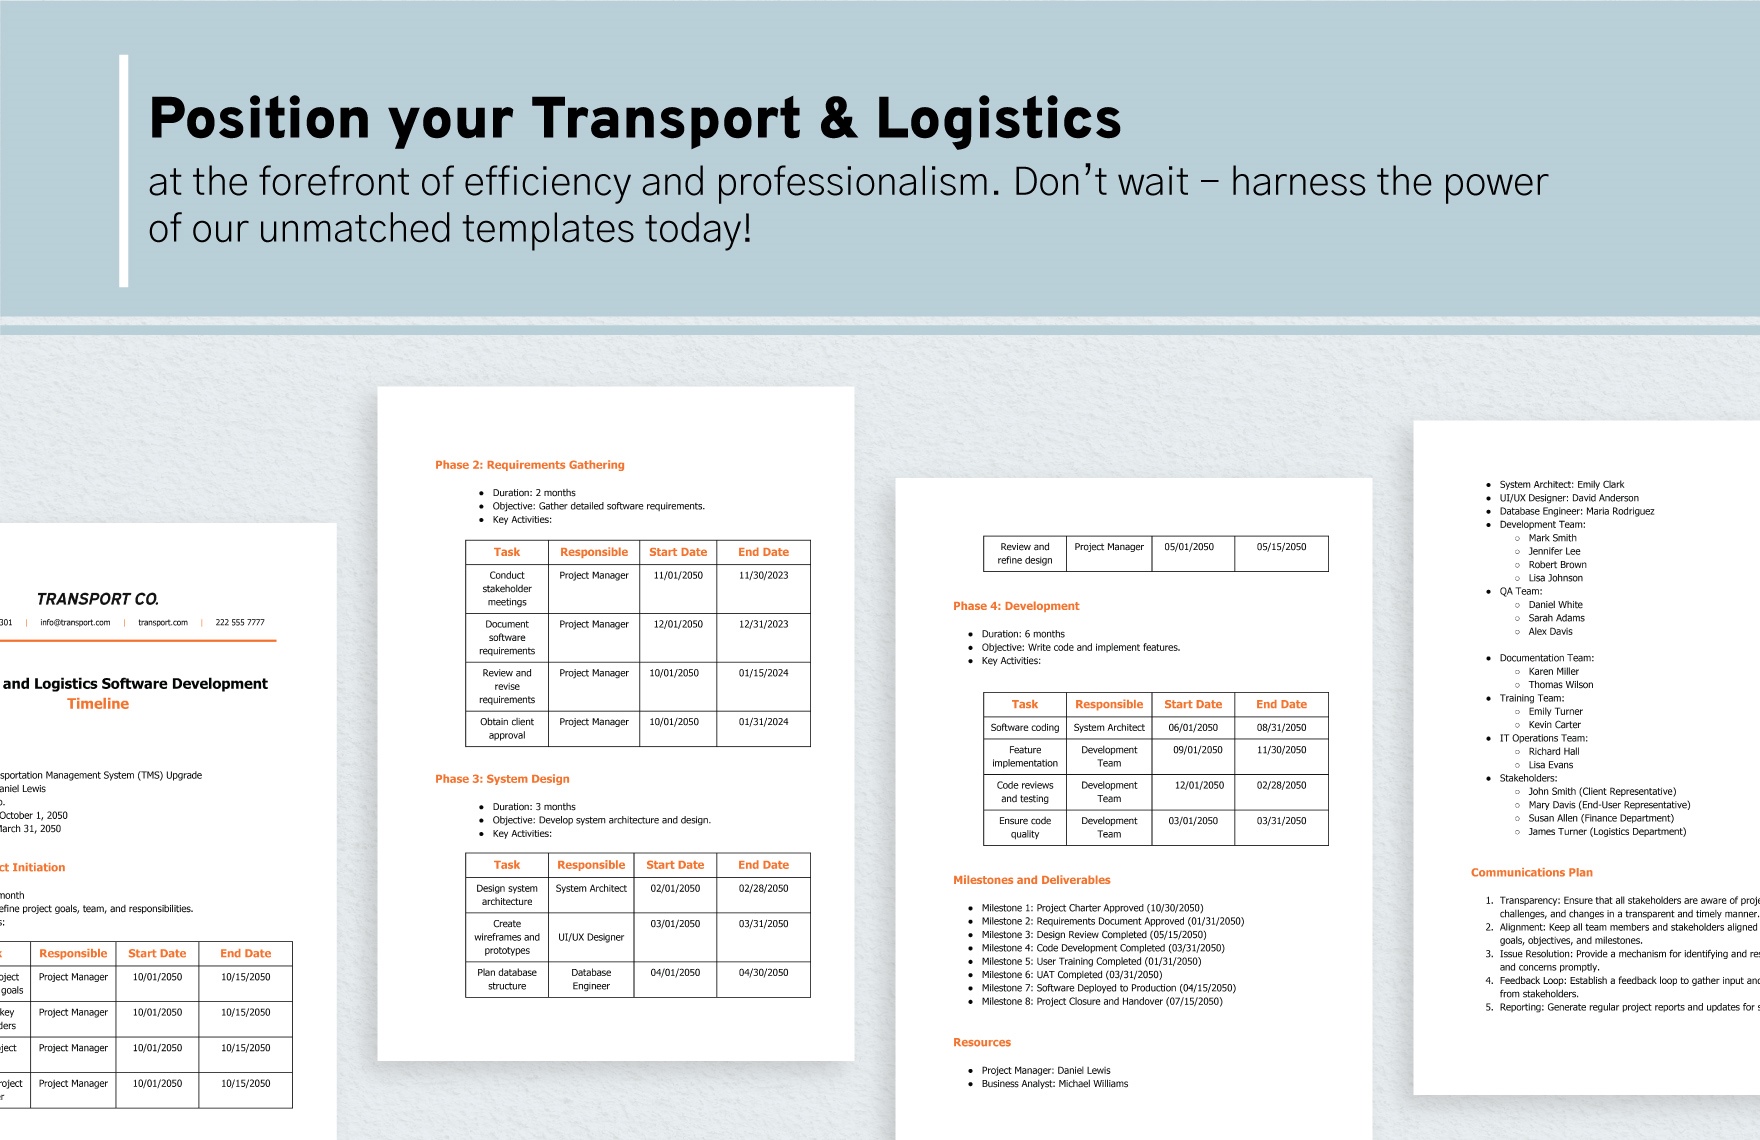 Transport and Logistics Software Development Timeline Template